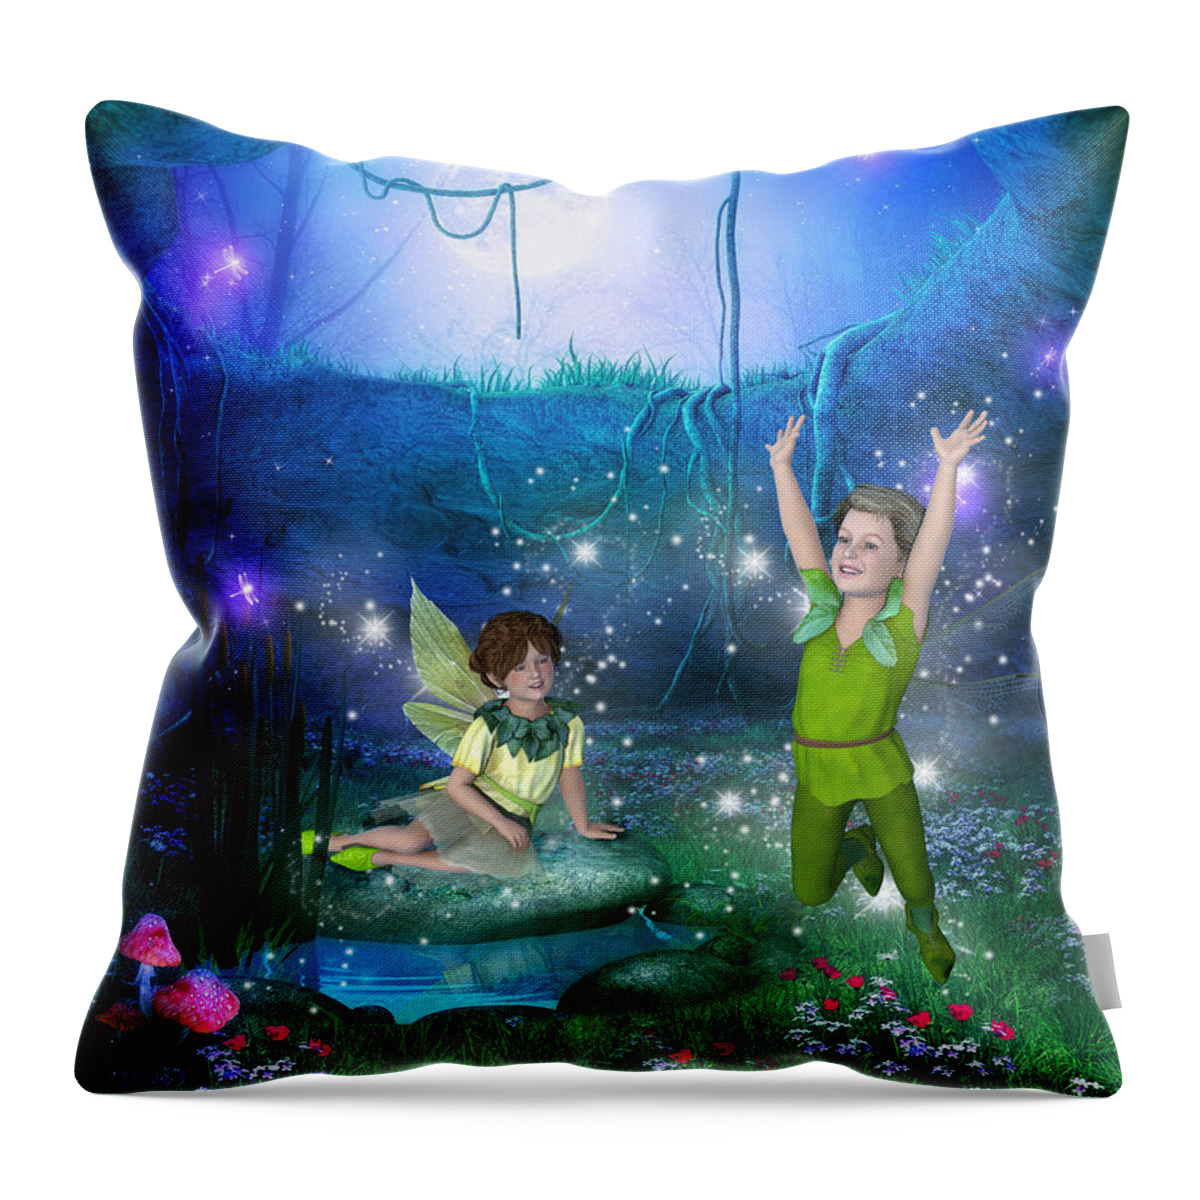 Fairy Throw Pillow featuring the digital art The Moonlight Fairies by Jayne Wilson